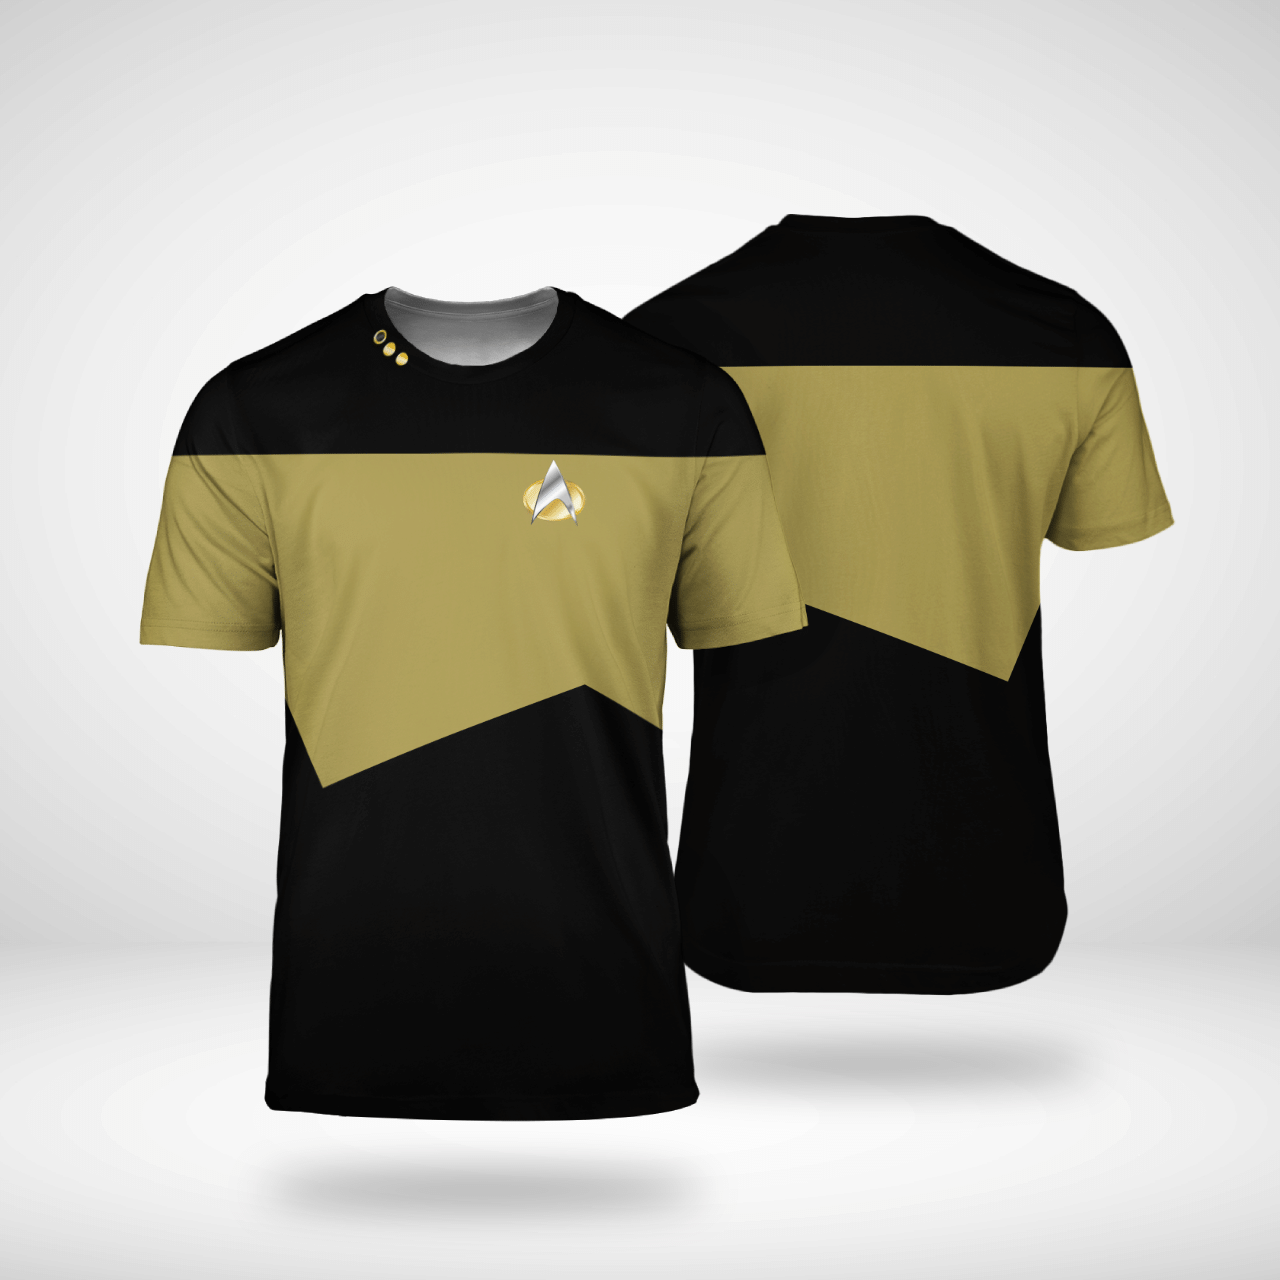 Star Trek Chief engineer 3d shirt – LIMITED EDITION